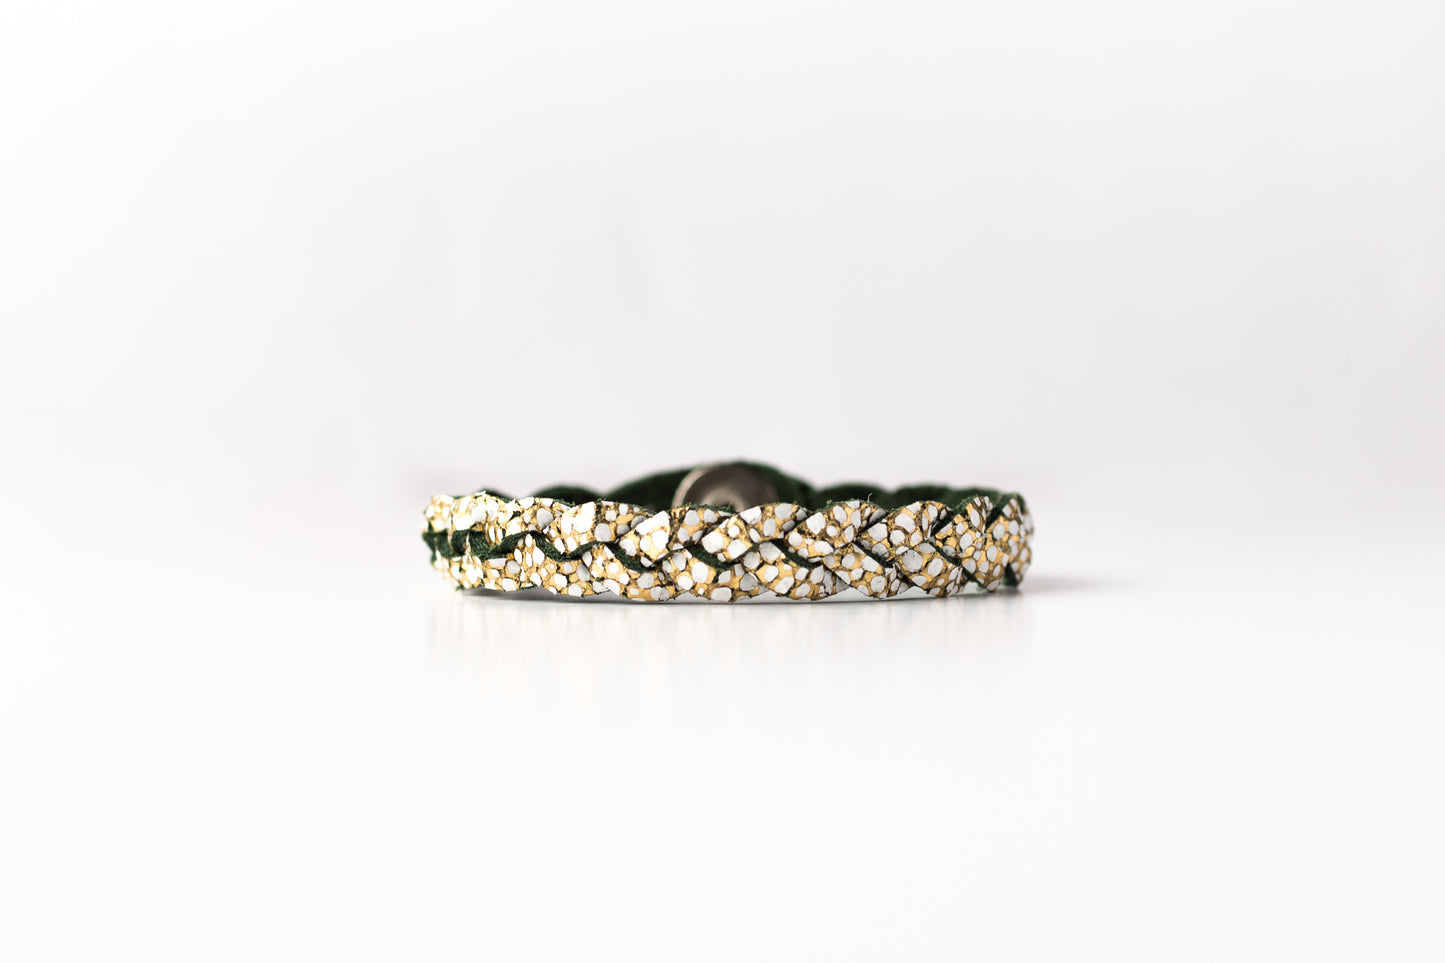 Braided Leather Bracelet / Golden Lilypad